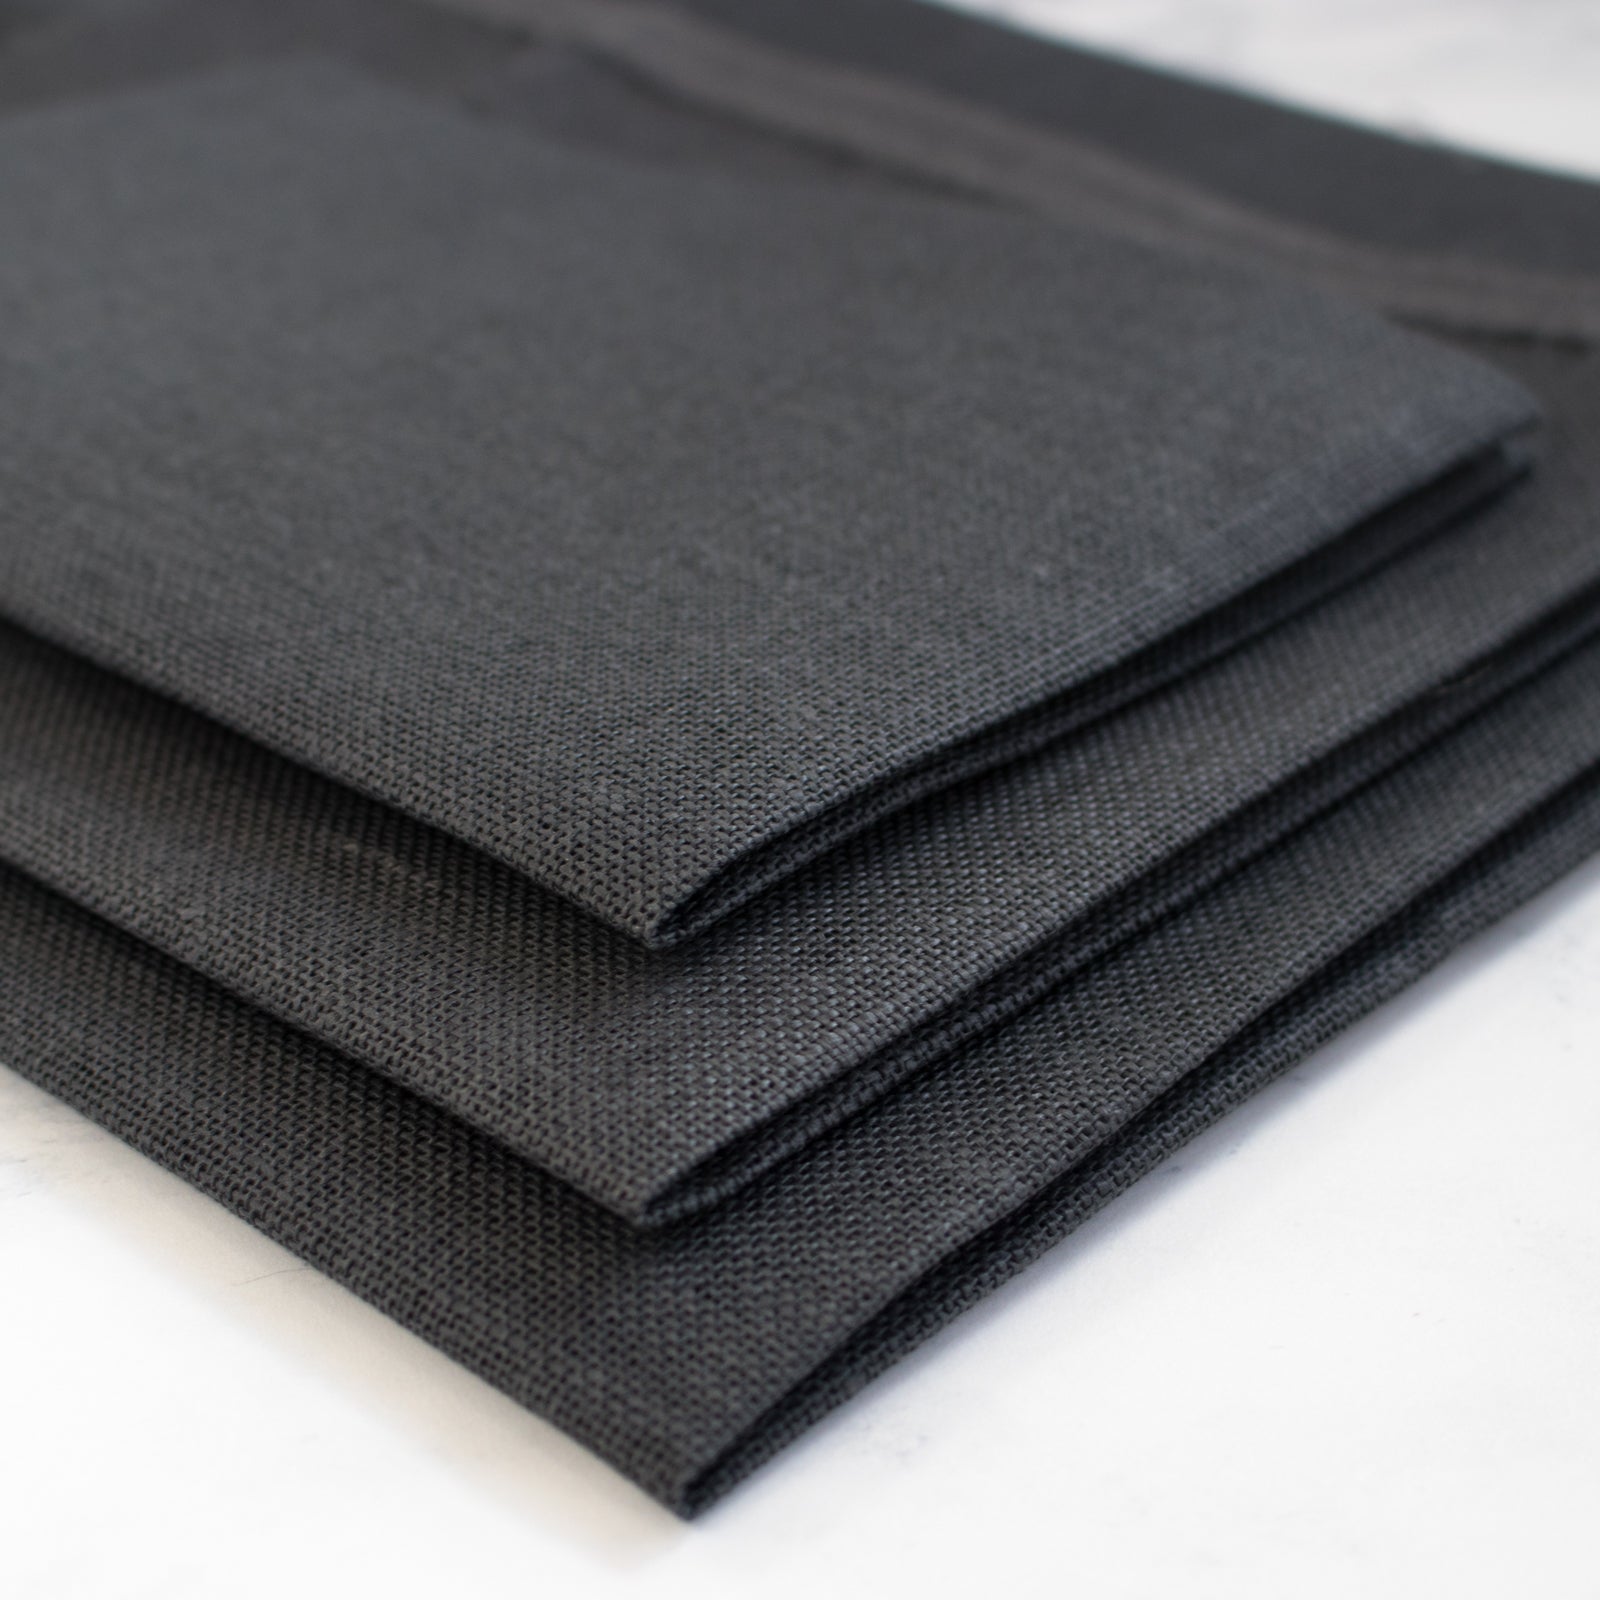 Chalkboard Black Linen Cross Stitch Fabric - 28 count - Stitched